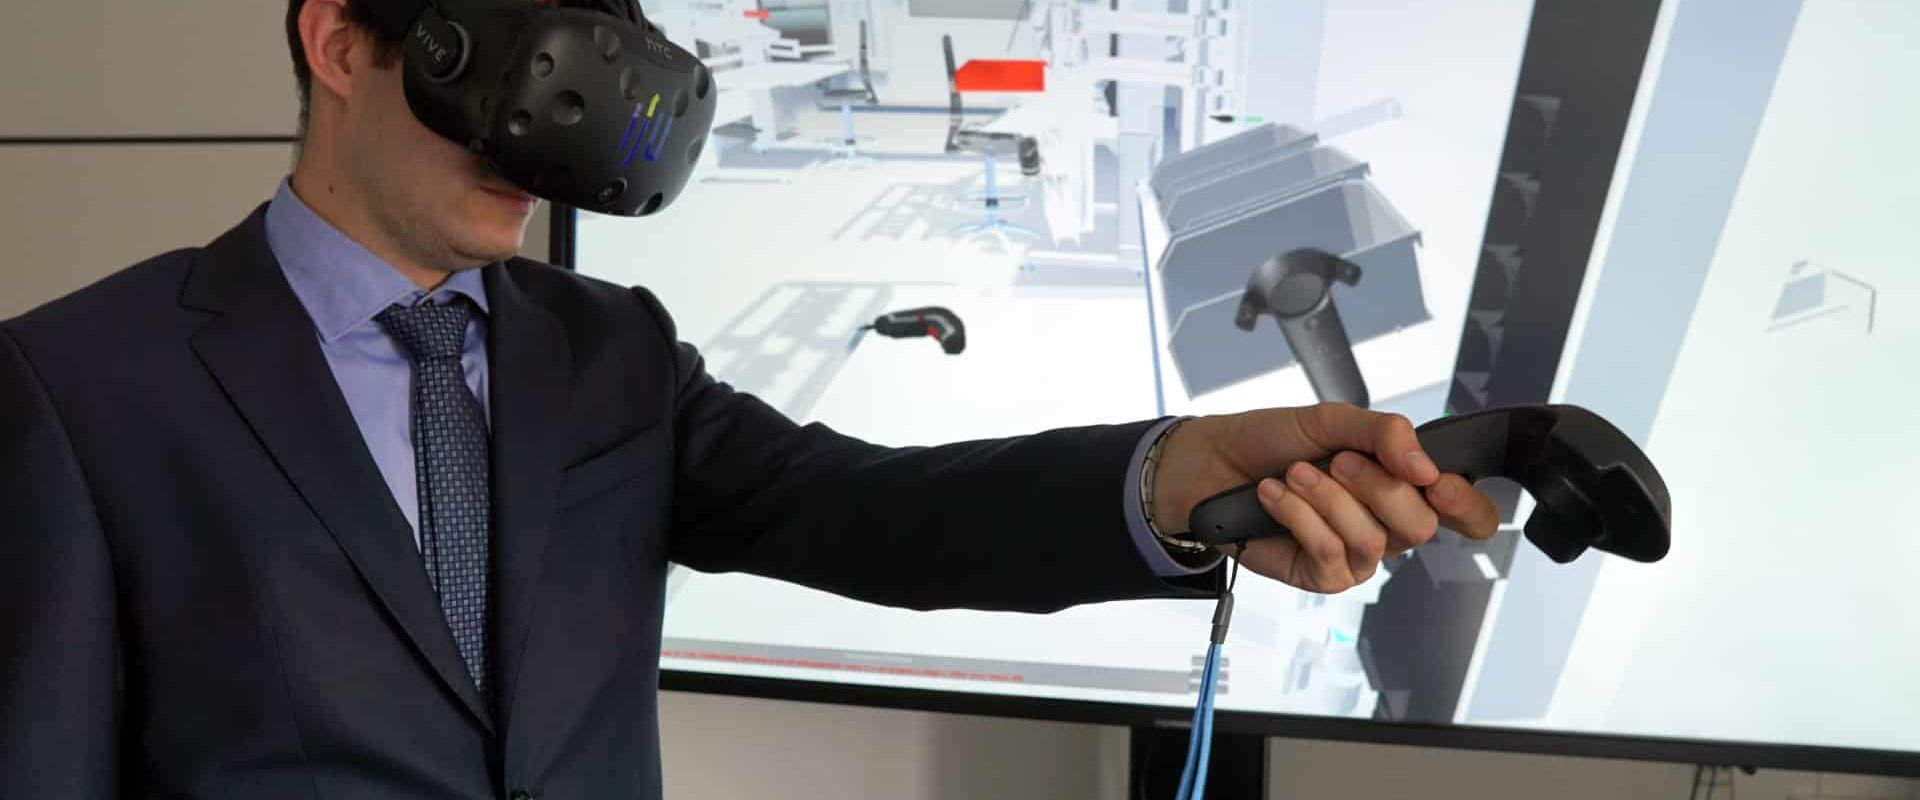 Interaktive Fabrikplanung mit Virtual Reality